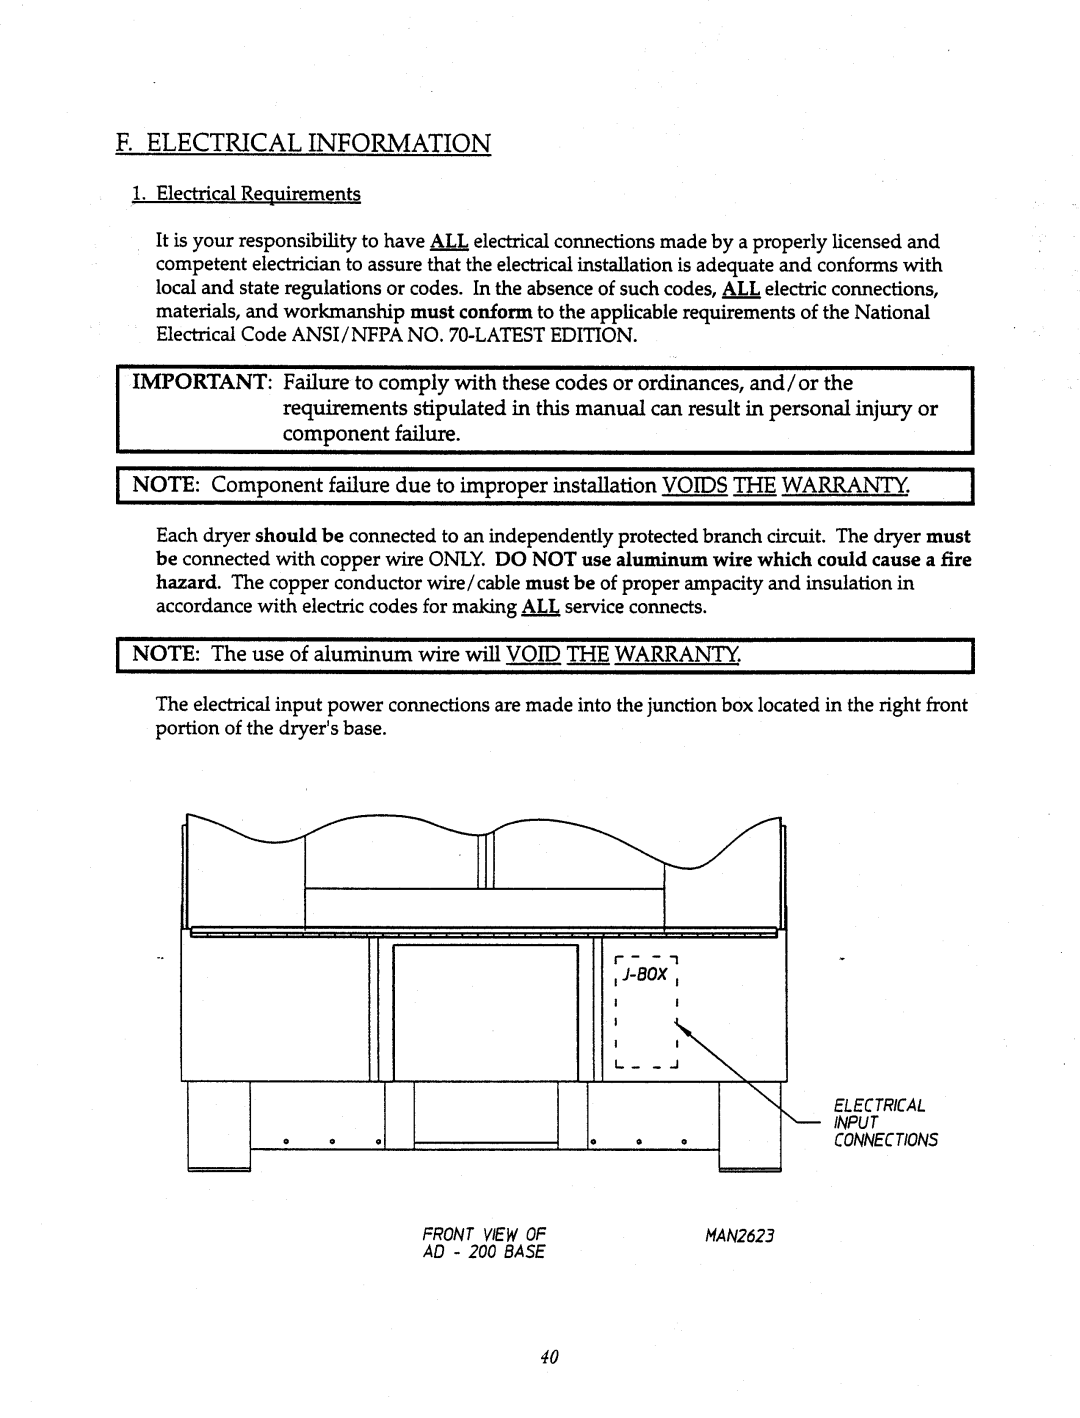 American Dryer Corp AD-200 Tilting manual 